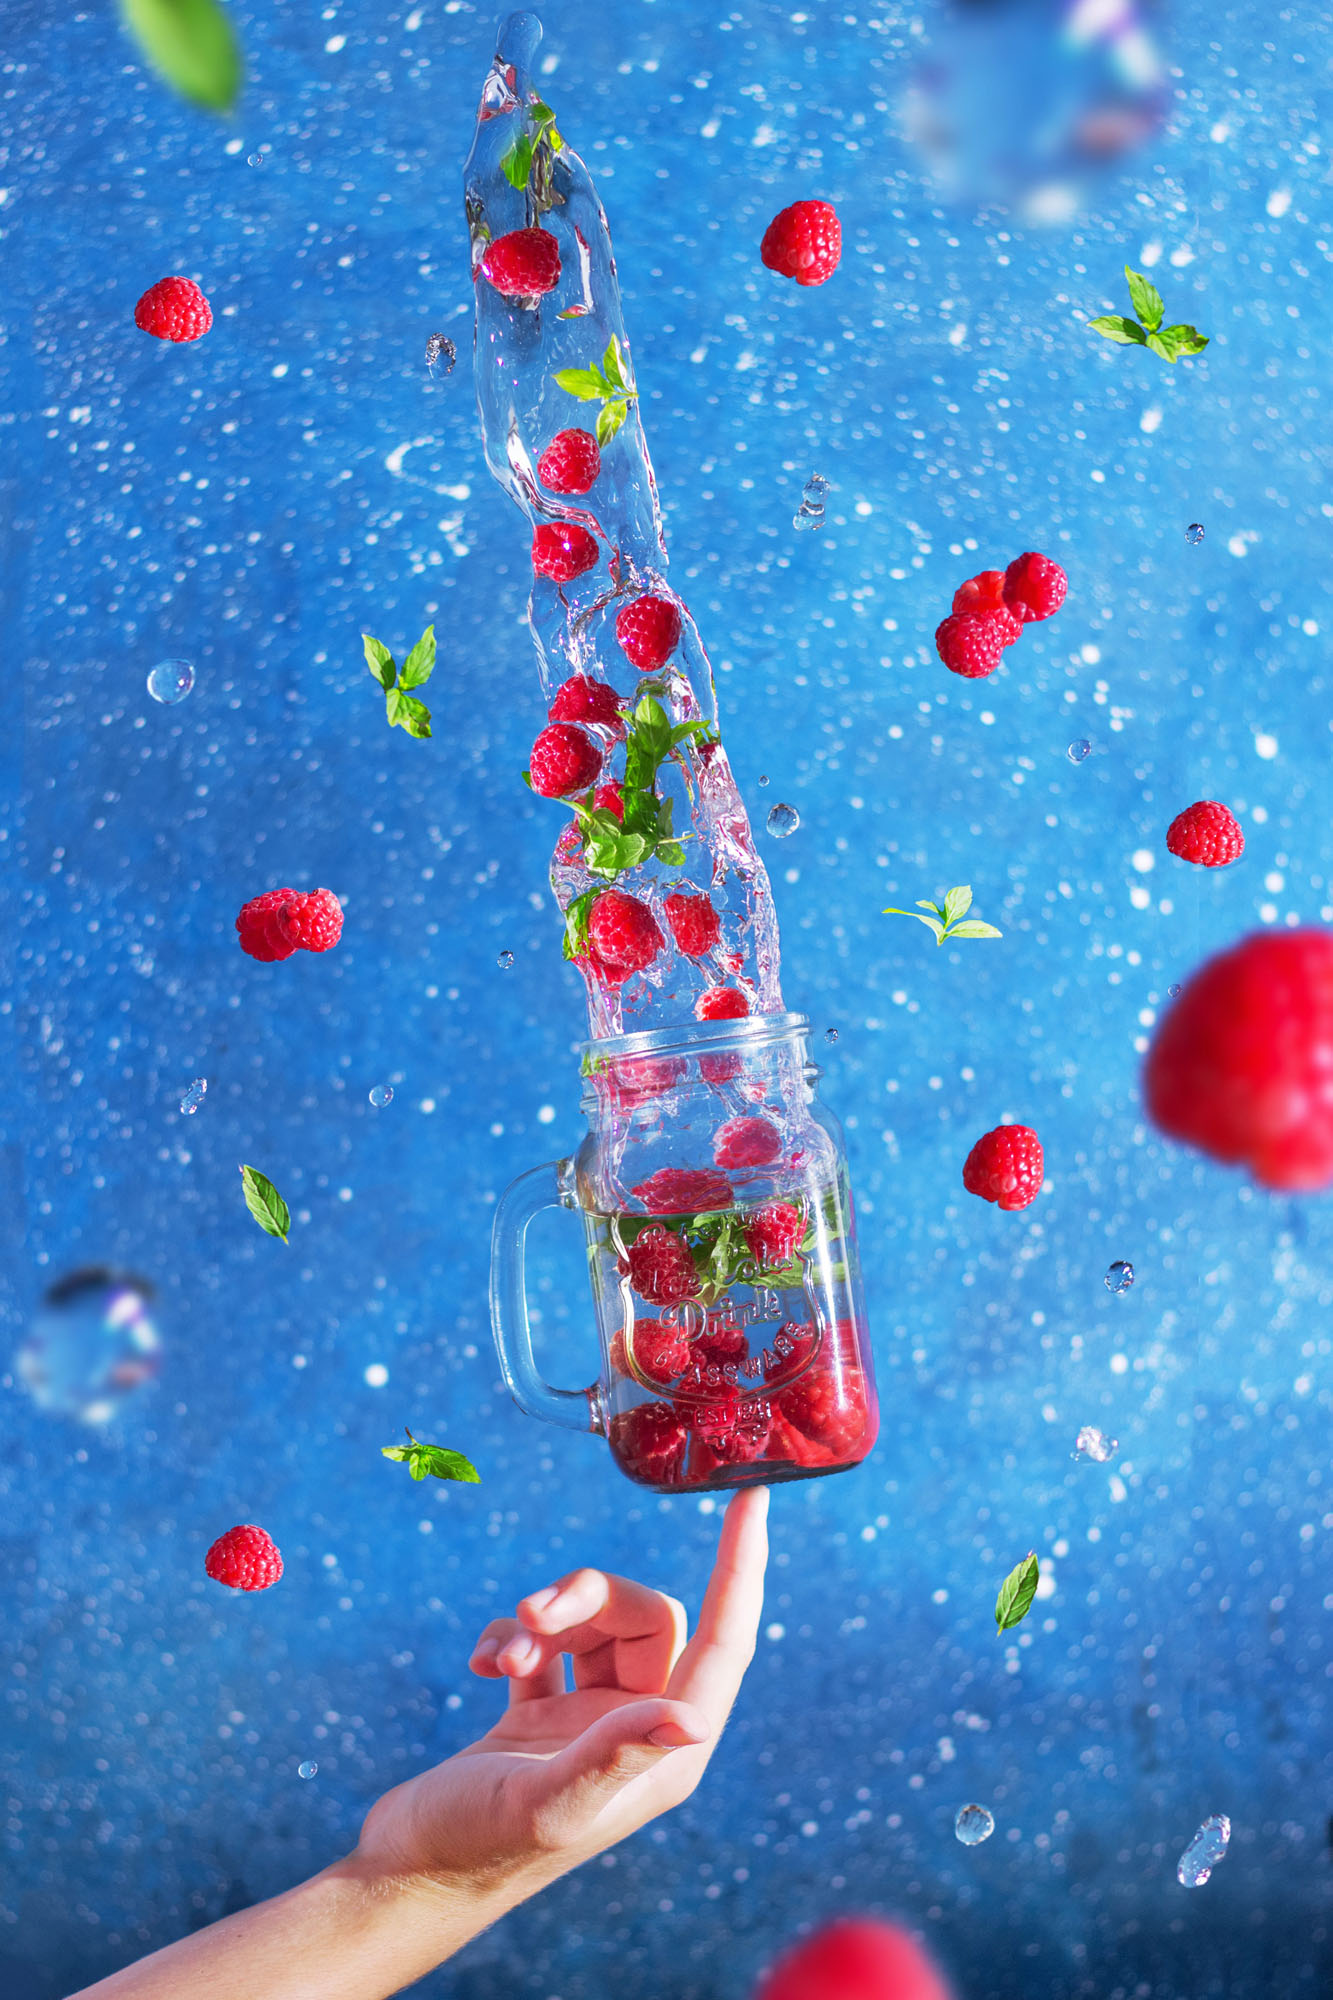 Berries splash